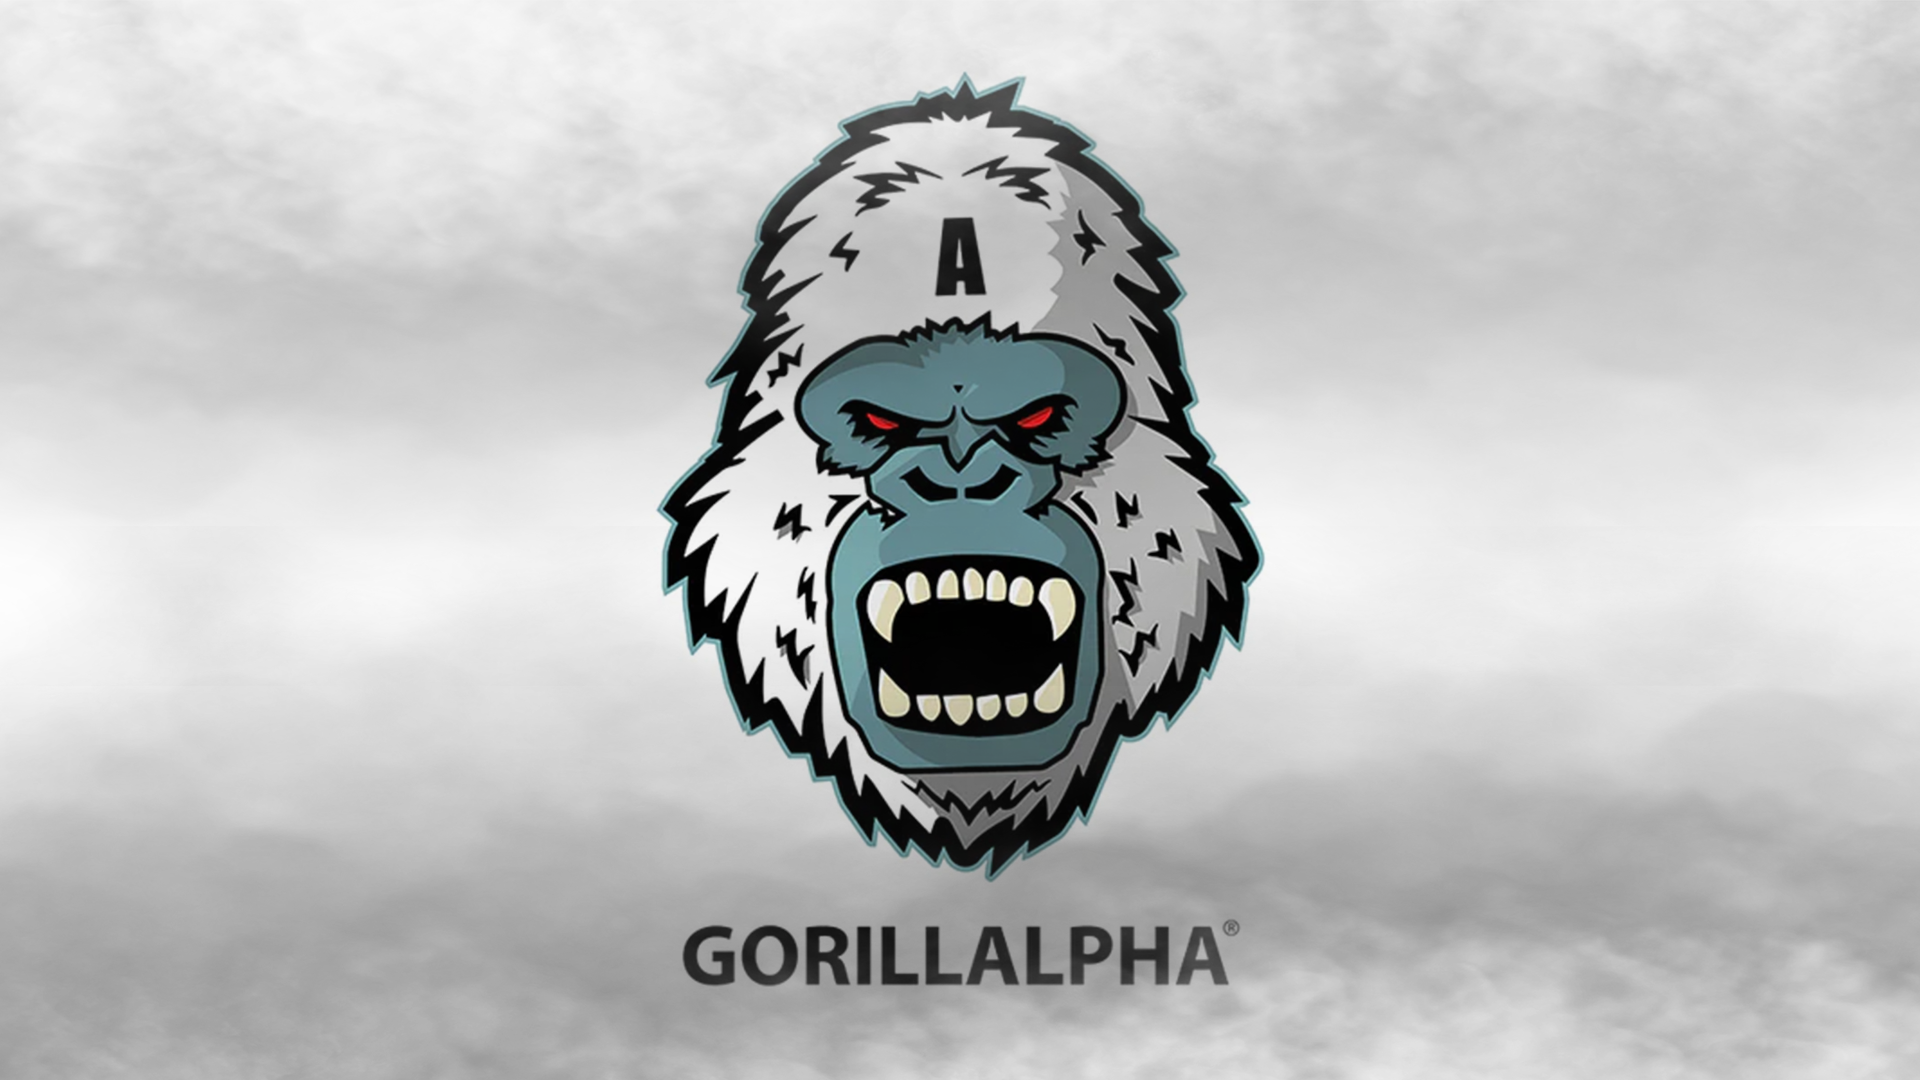 Gorilla Alpha